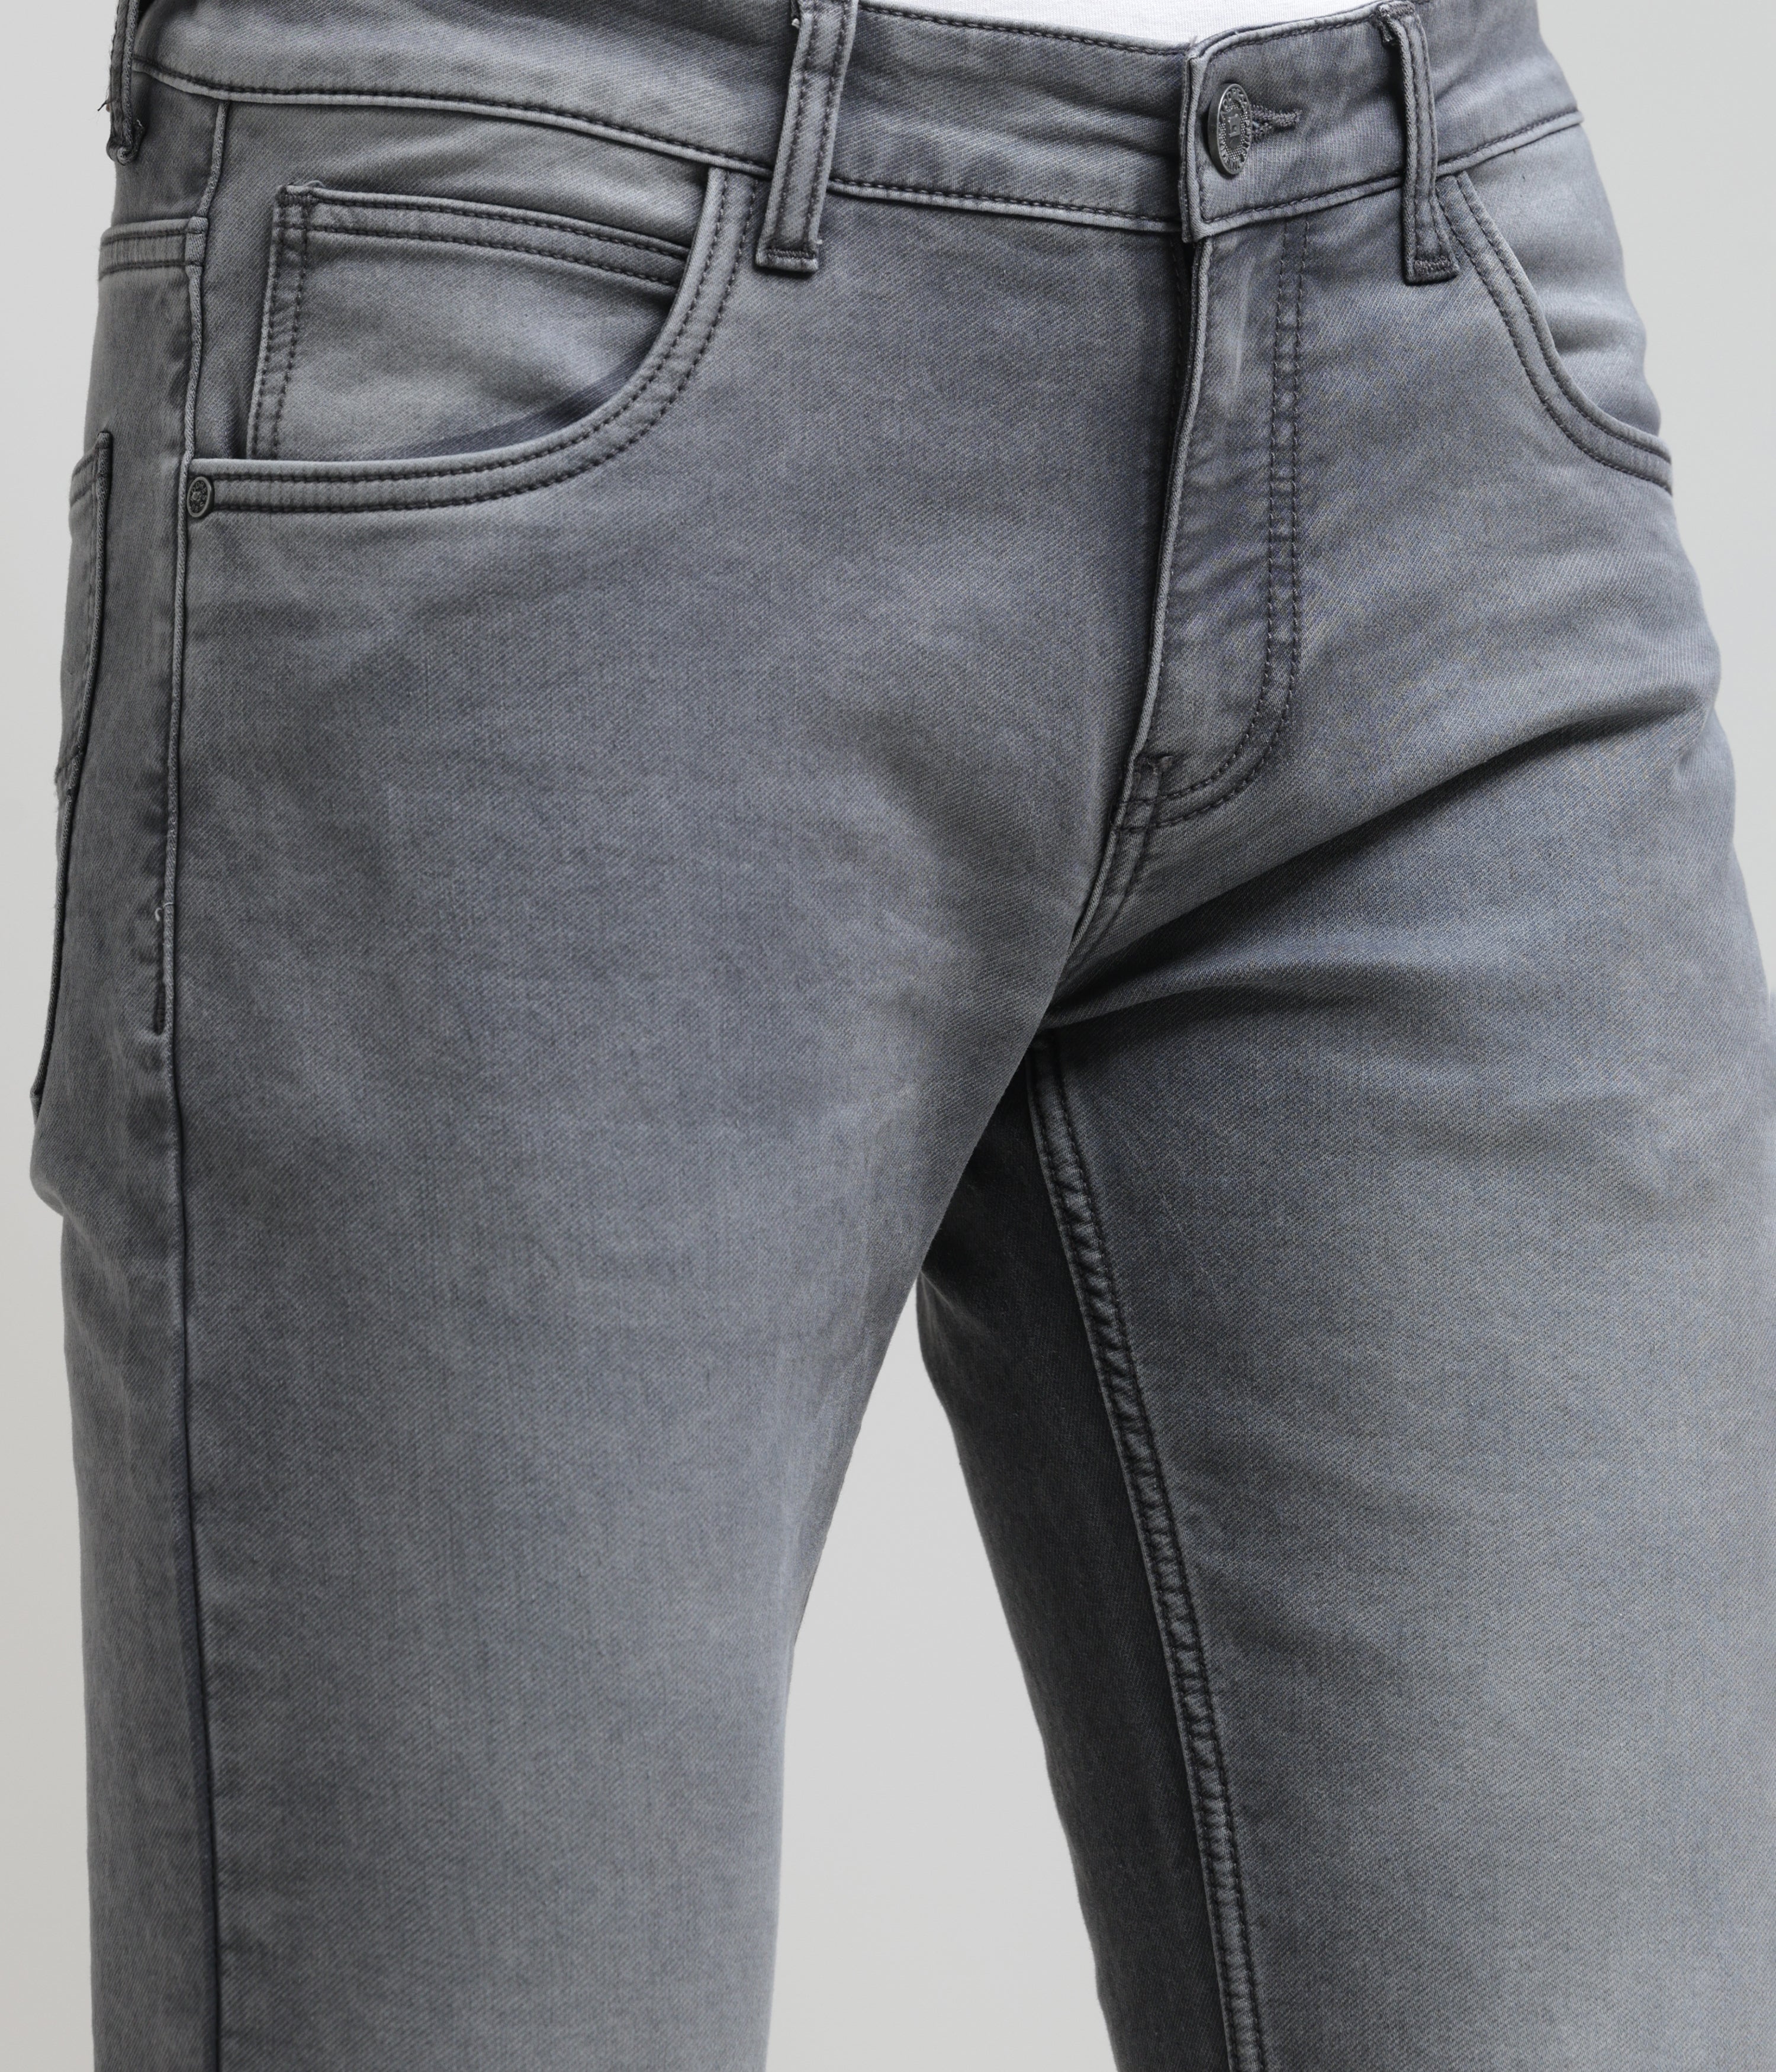 Grey Denim Jeans: Stylish Details, Versatile Comfort for Any Look